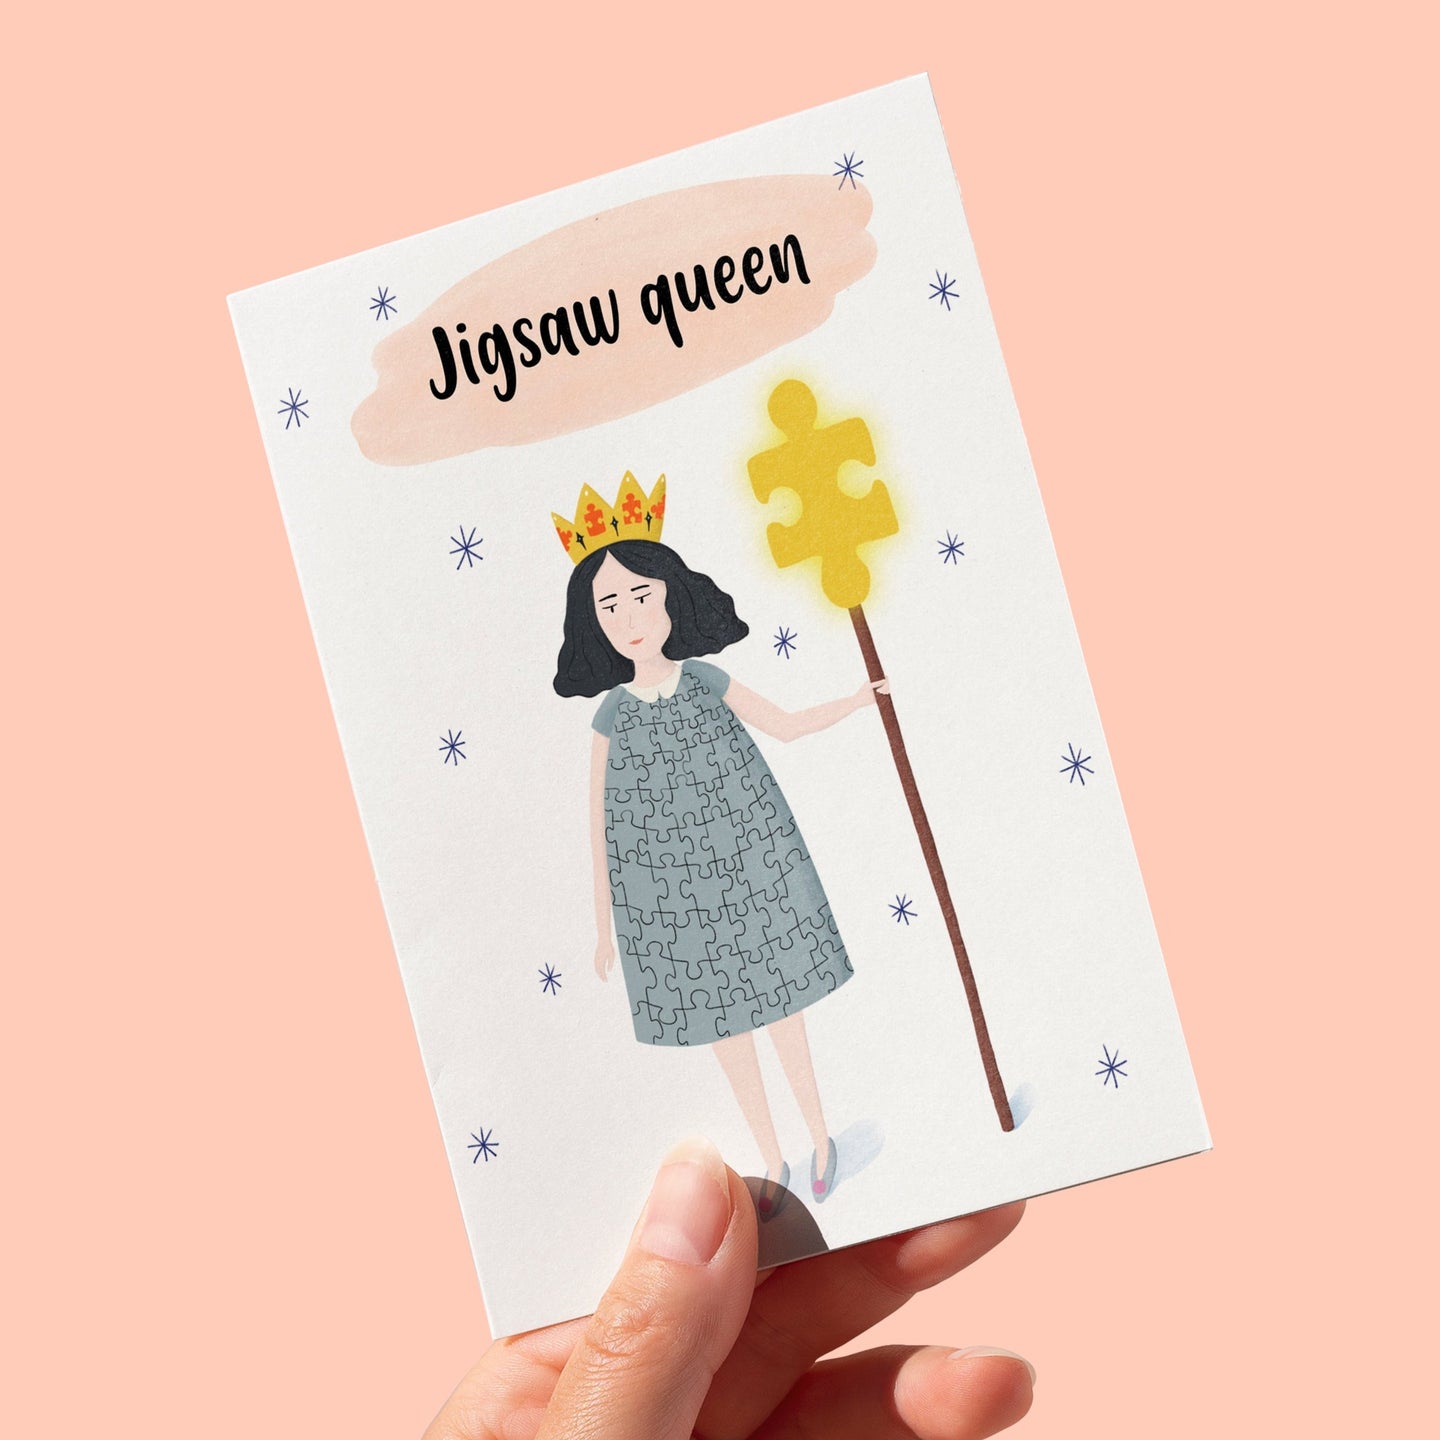 Jigsaw queen greeting card